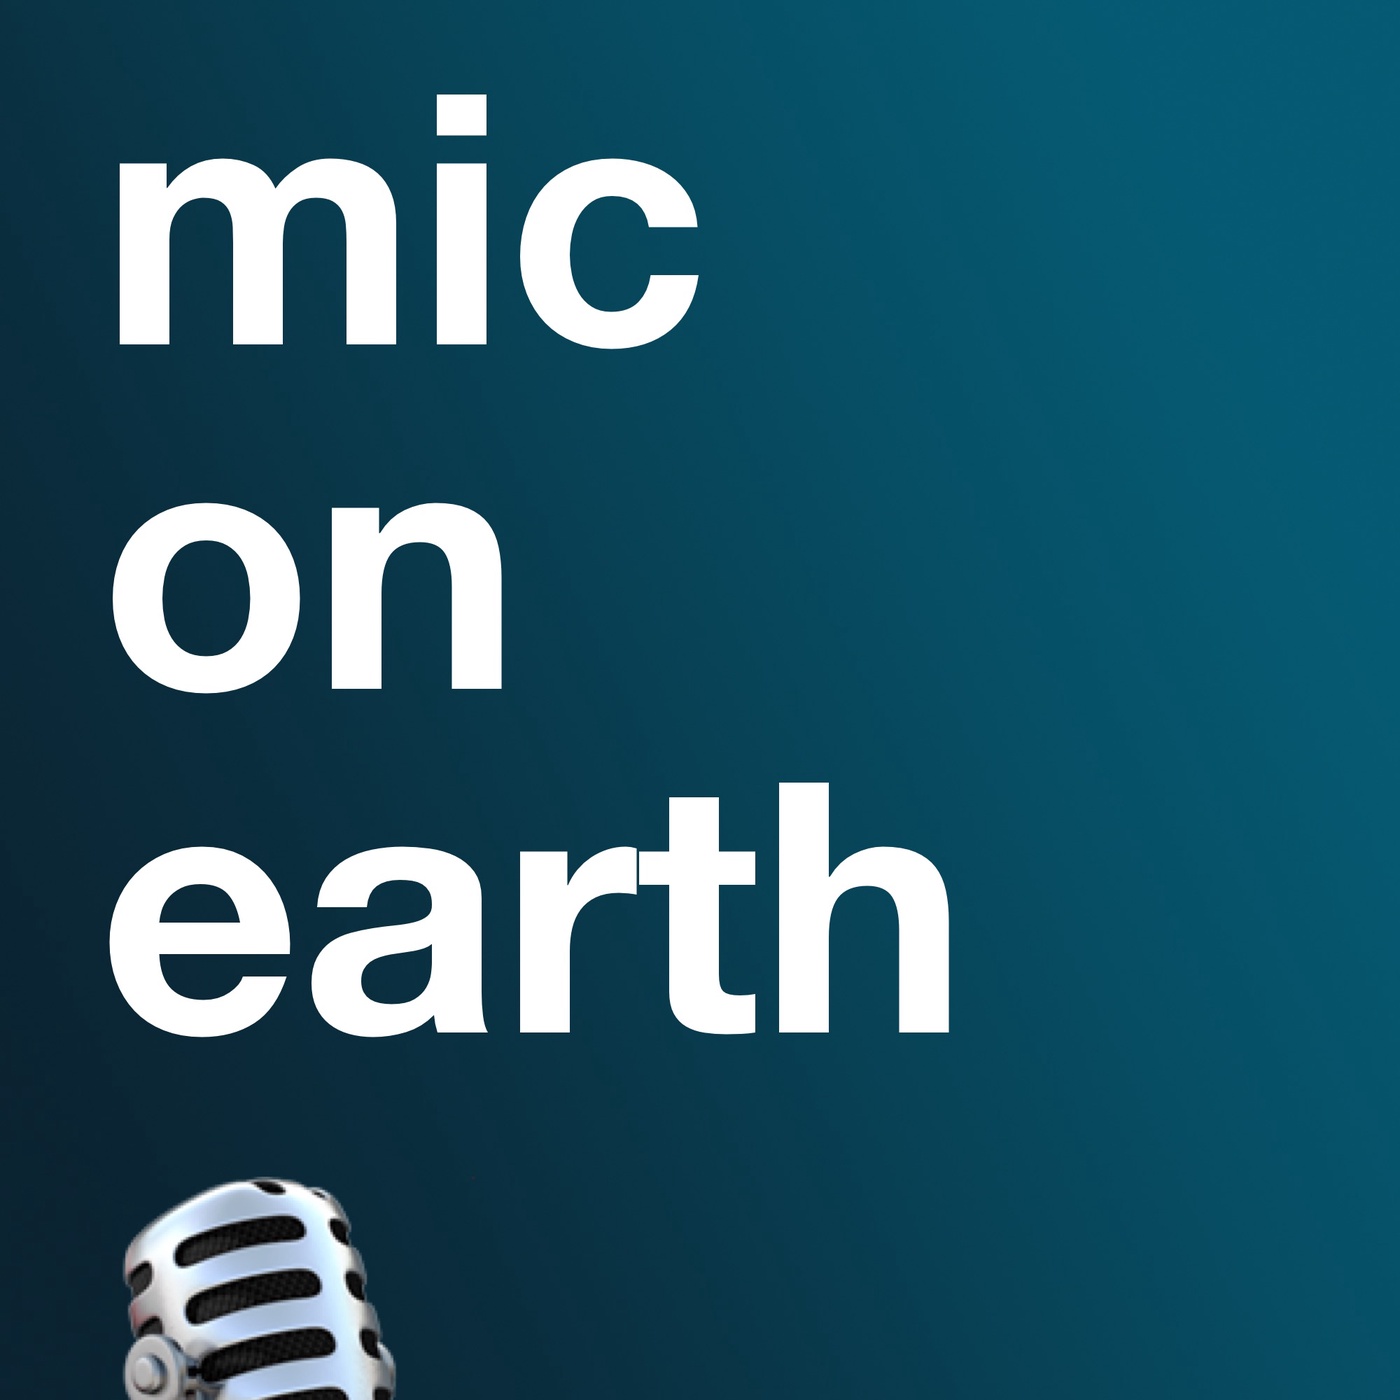 mic-on-earth